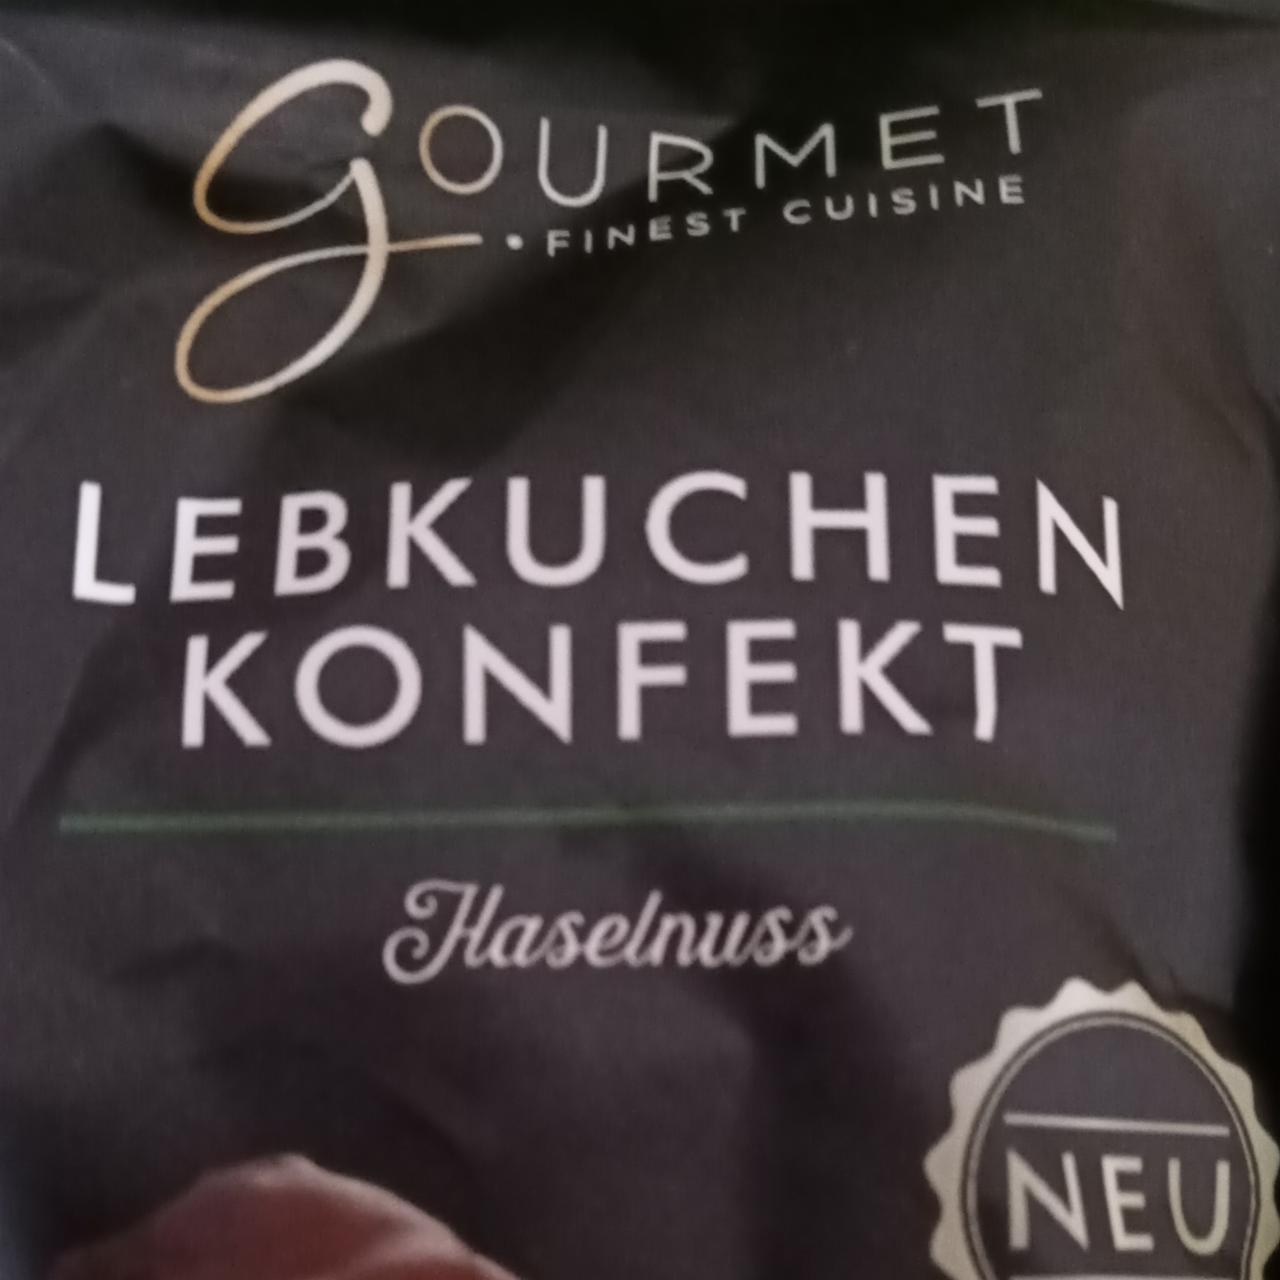 Fotografie - Lebkuchen Konfekt Haselnuss Gourmet finest cuisine